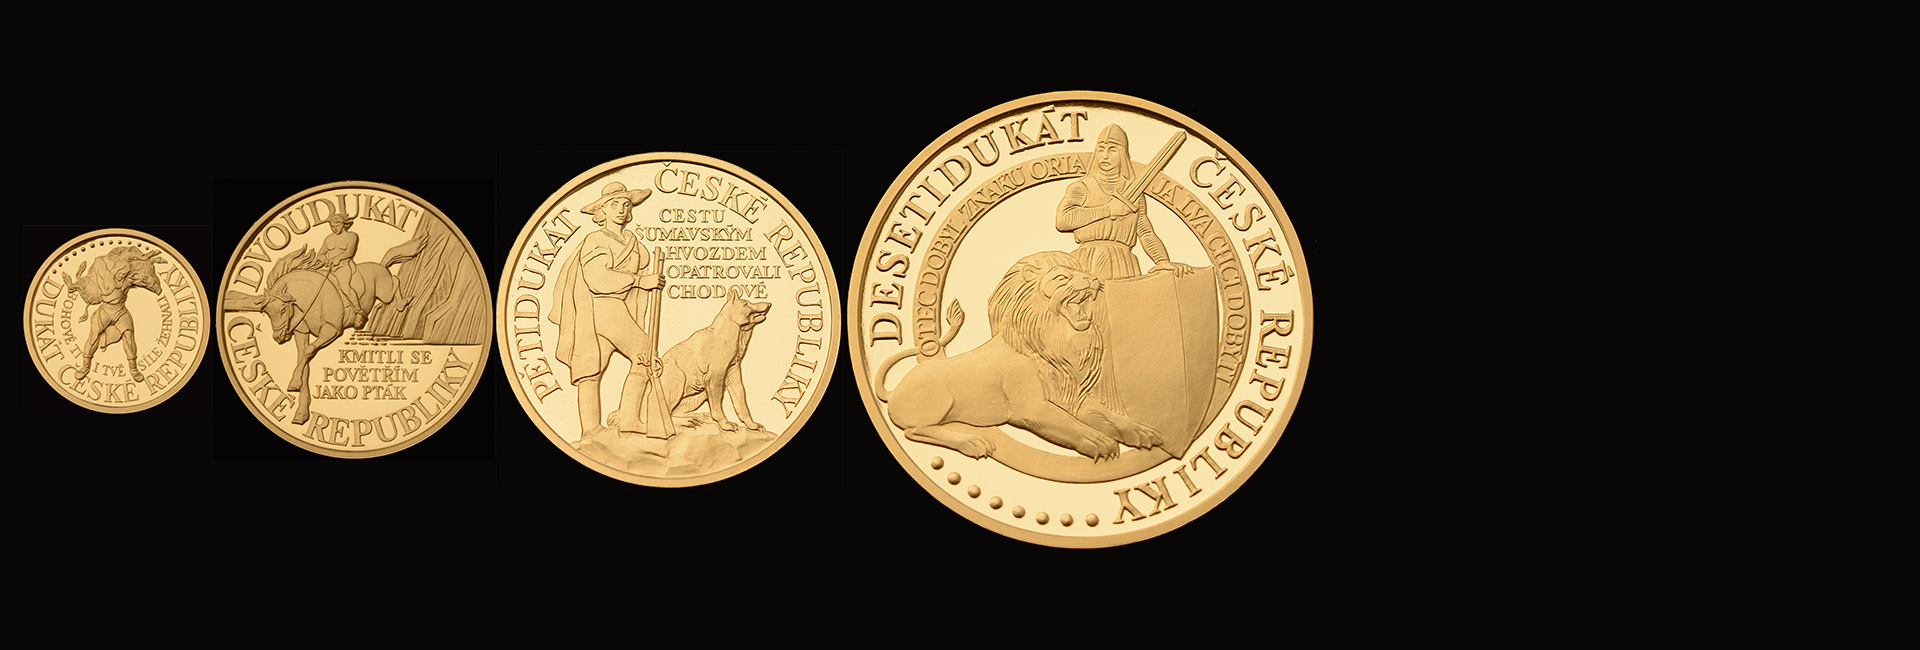 Czechia, 2011 [Set of four gold commemorative medals, Czech legends]